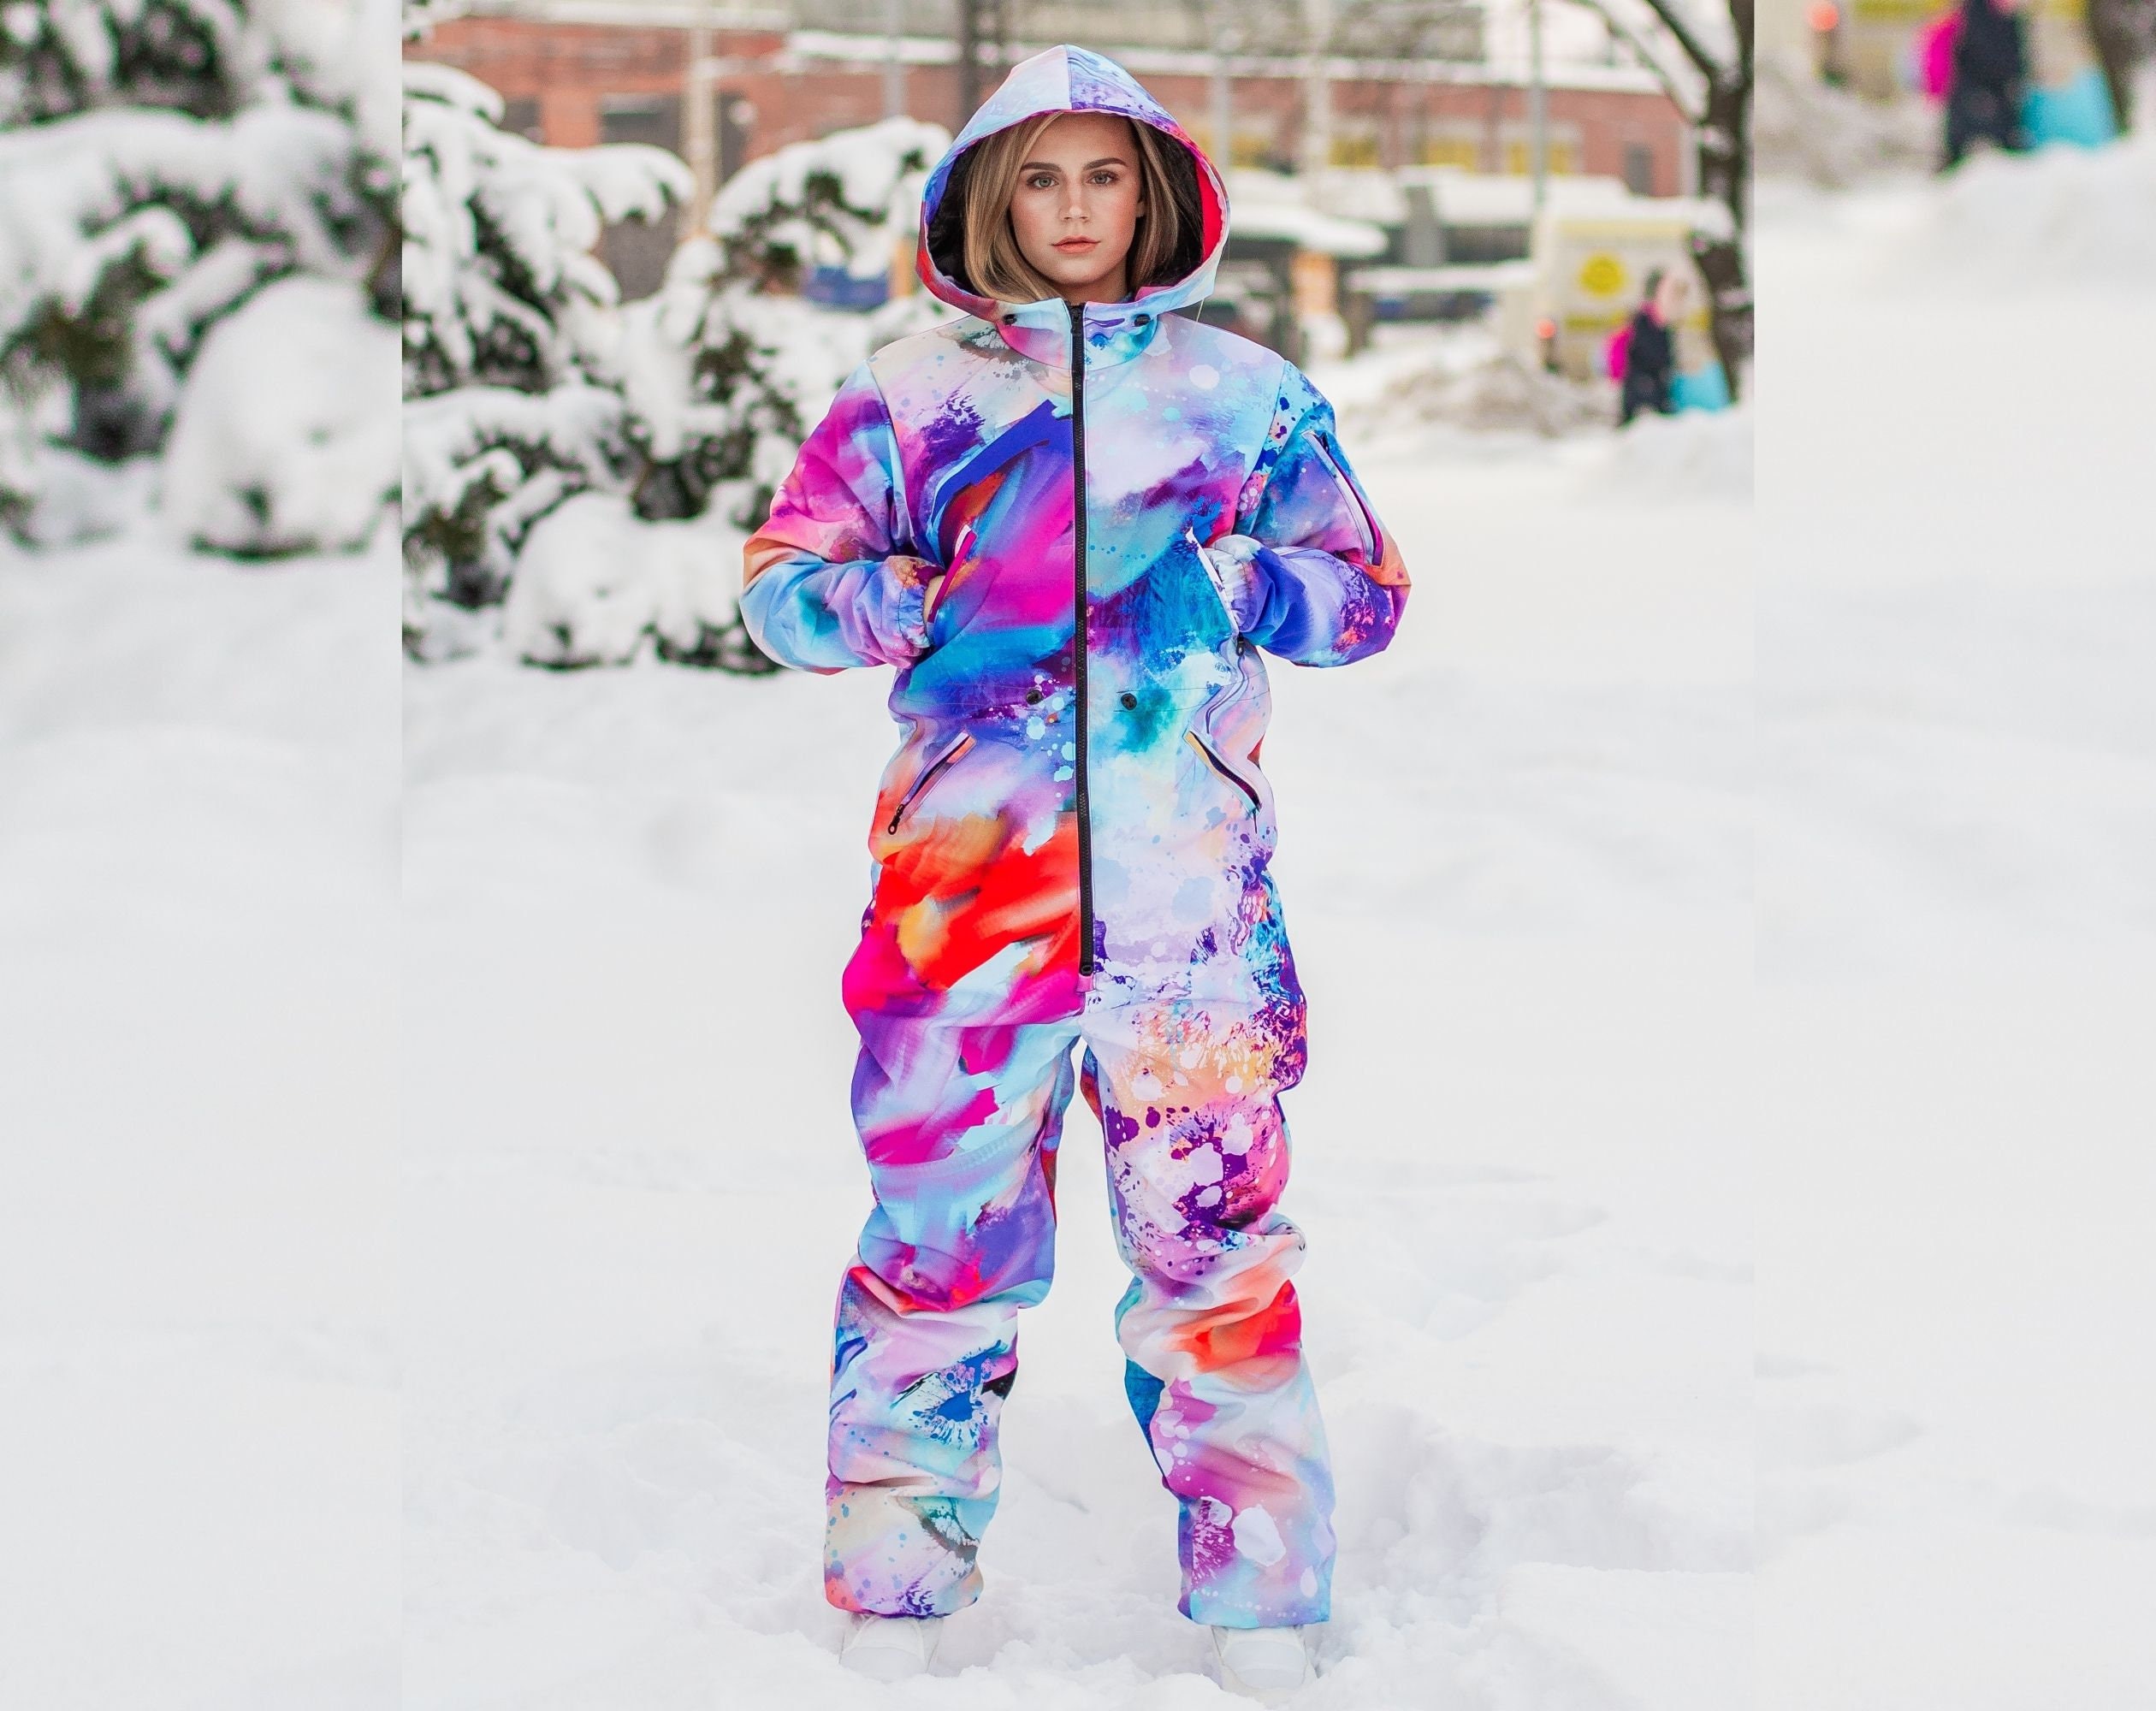 LPATTERN Baby/Toddler/Kids Boys Girls Winter Warm Snowsuit Cartoon Ski Suit Set Cute Hooded Down Jacket Snow Ski Bib Pants 2-Pieces Snowboard & Skiing Outfit Set 